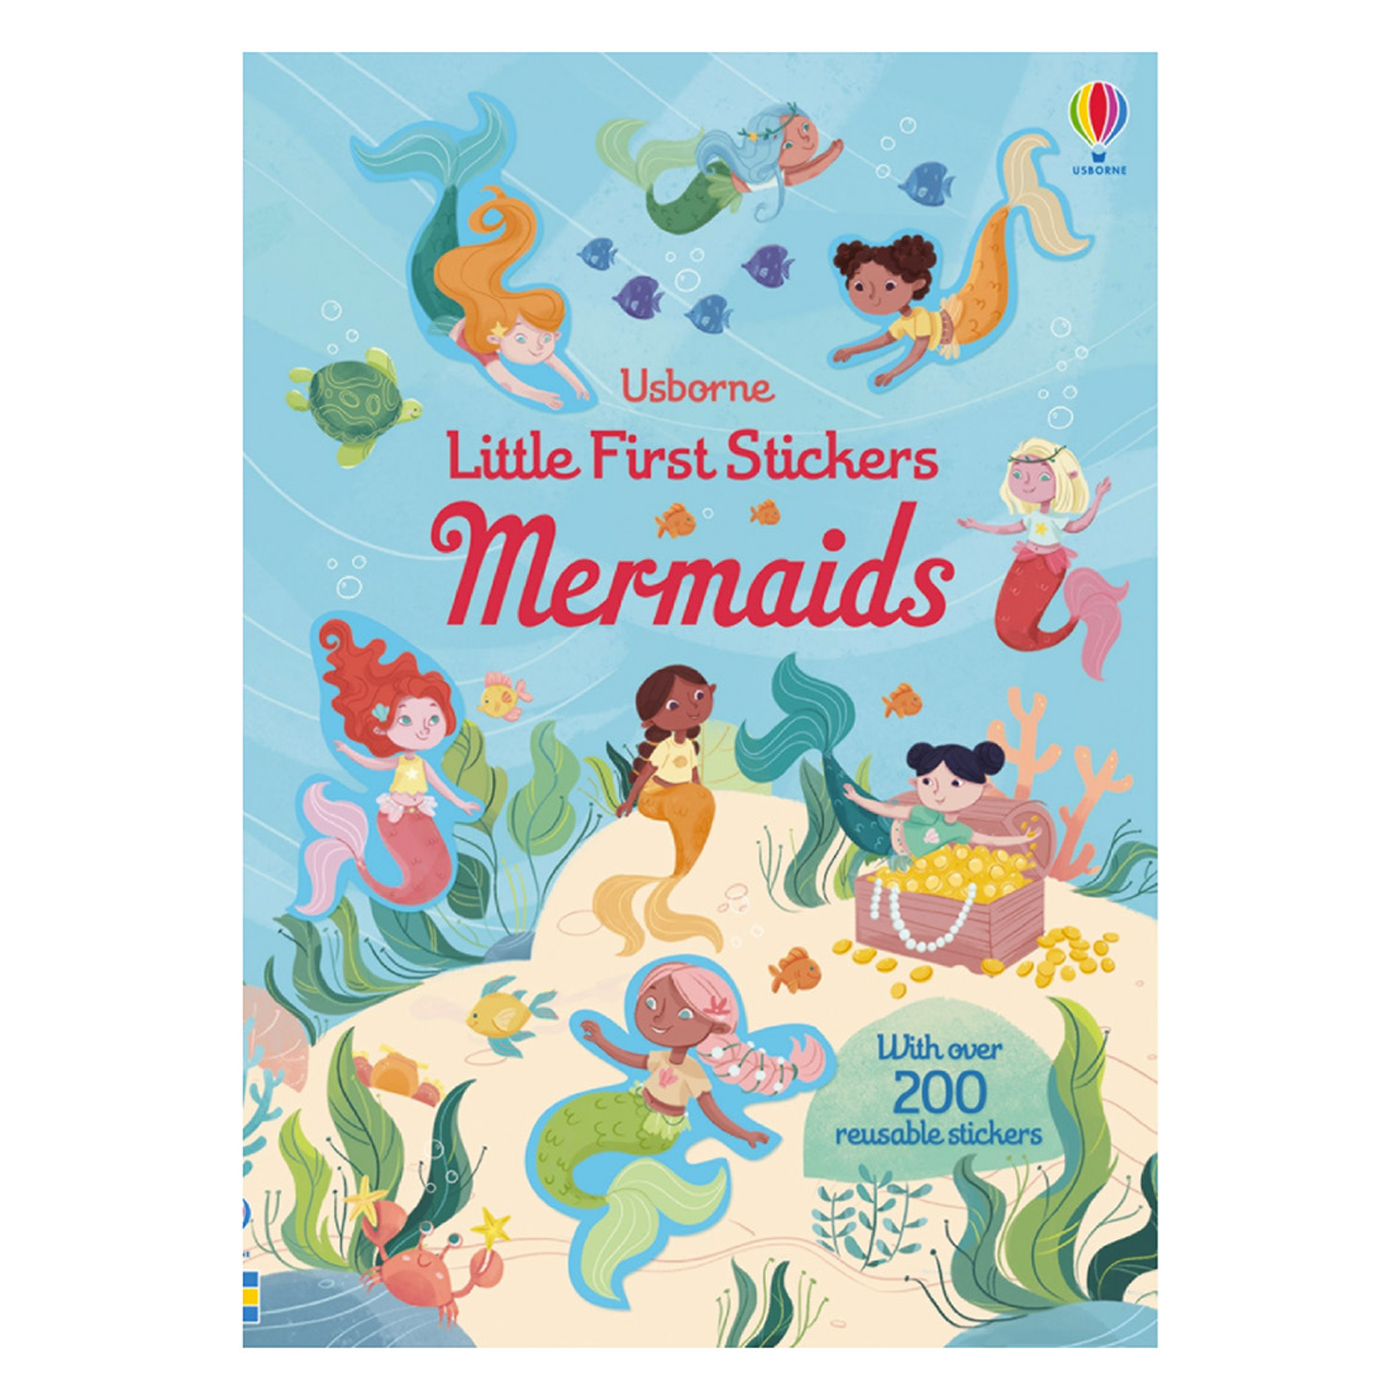  Little First Stickers Mermaids